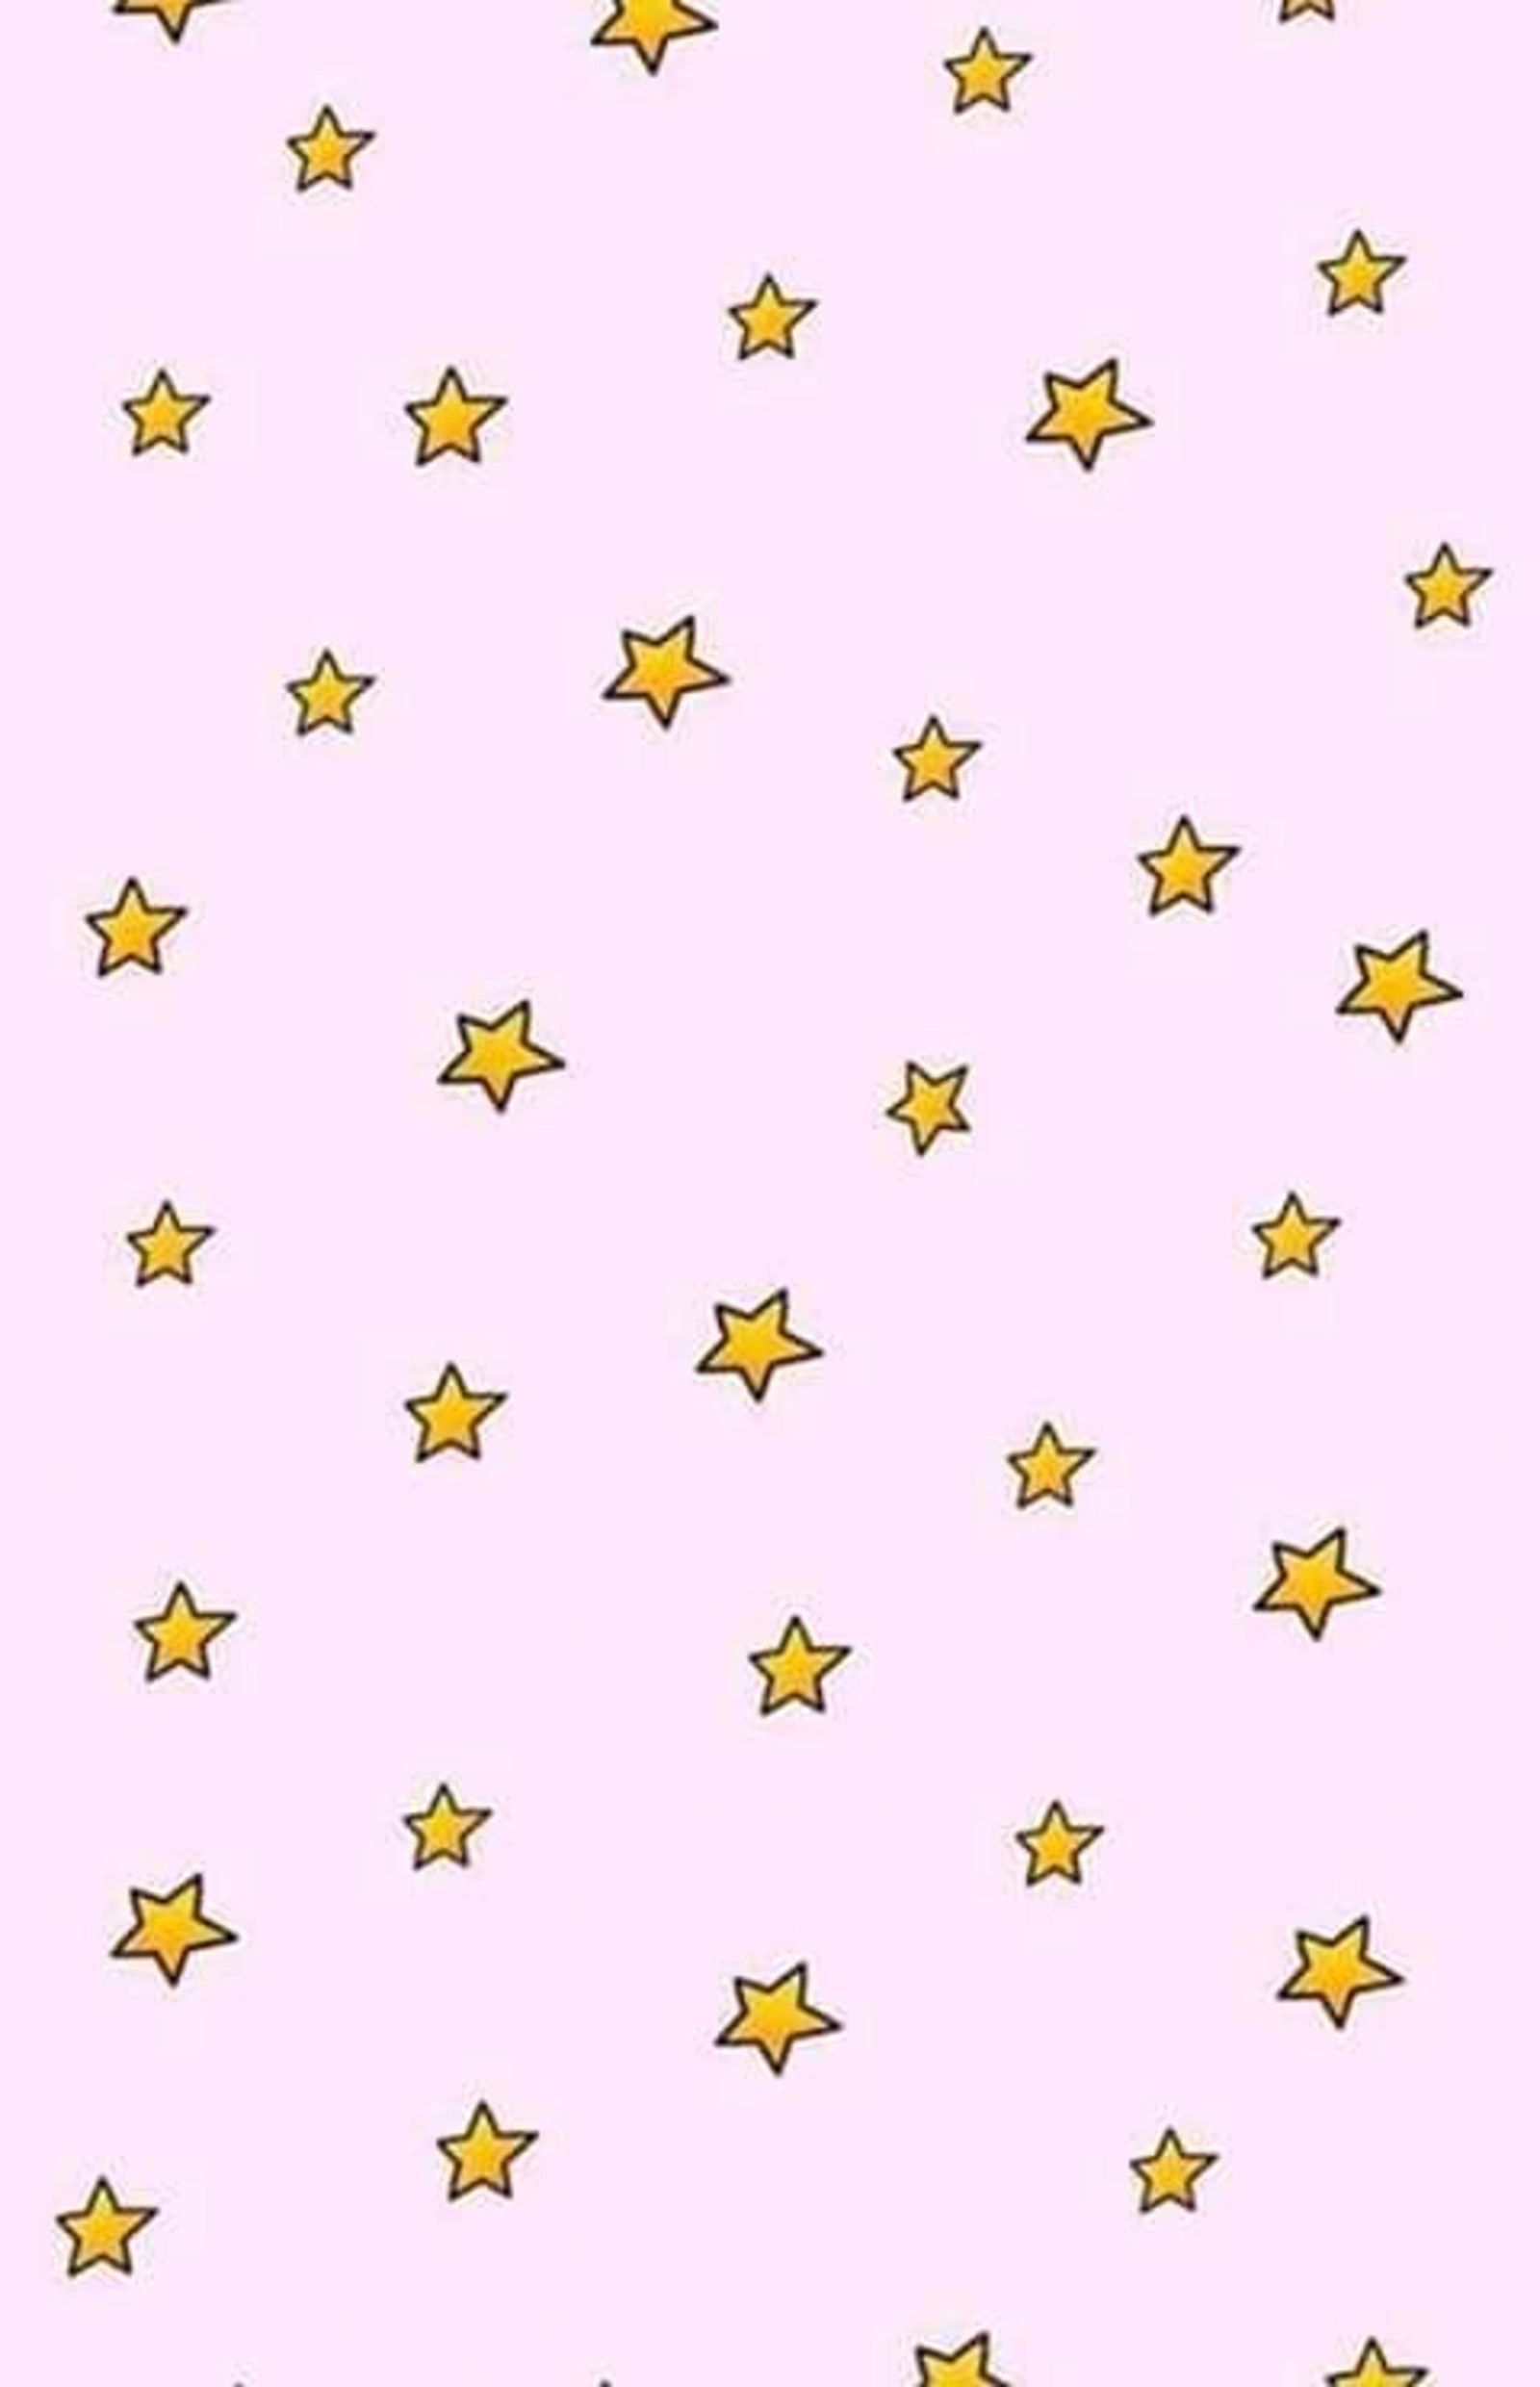 Inspirational Pink Wallpaper Vsco Stars Yellow. Star wallpaper, Pink wallpaper iphone, Pink wallpaper